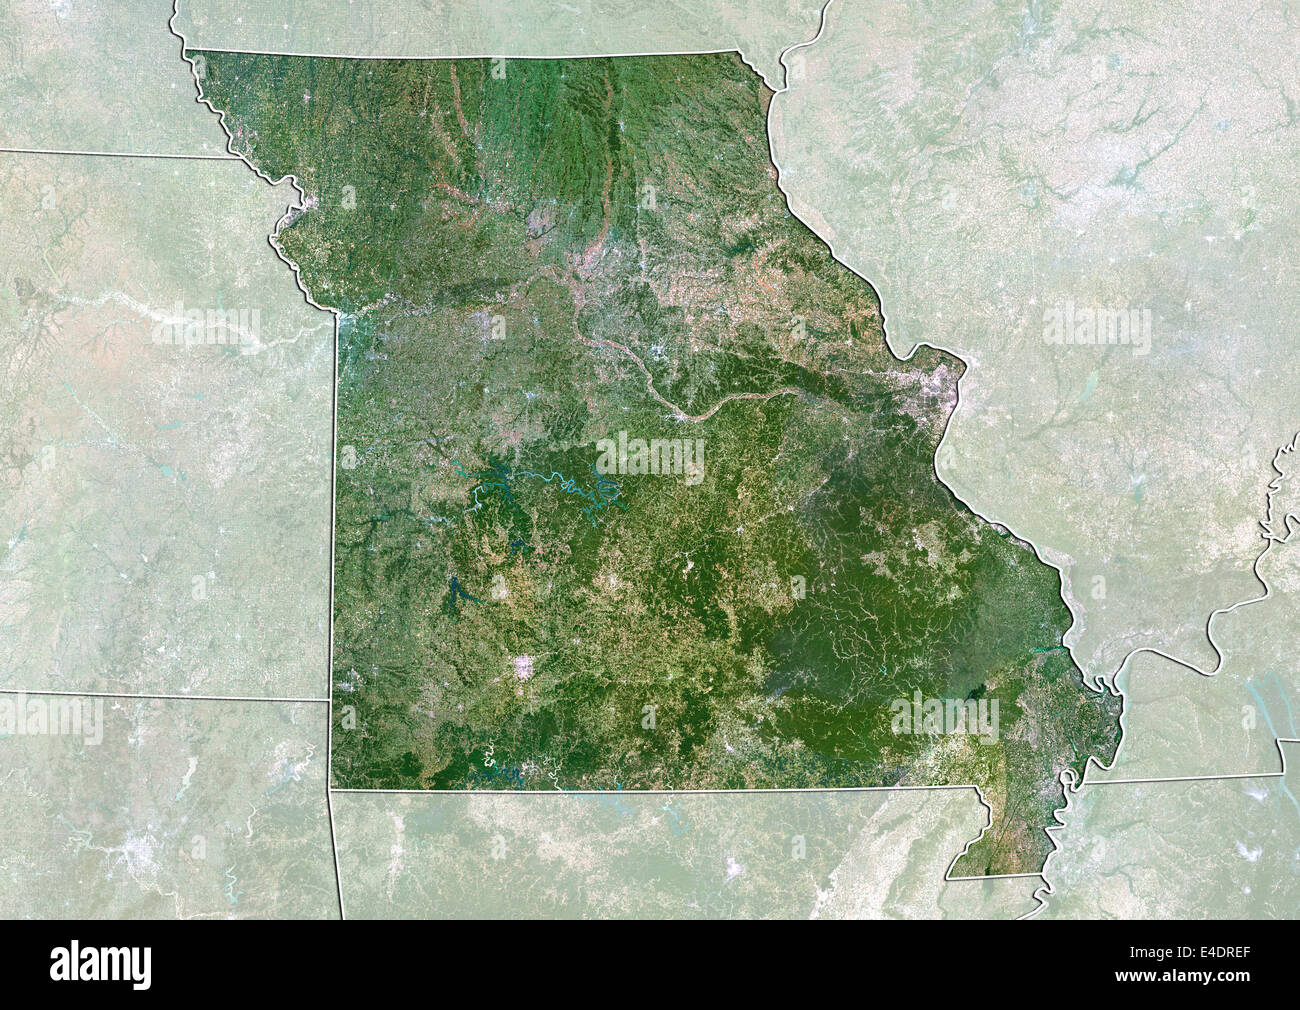 State Of Missouri United States True Colour Satellite Image E4DREF 